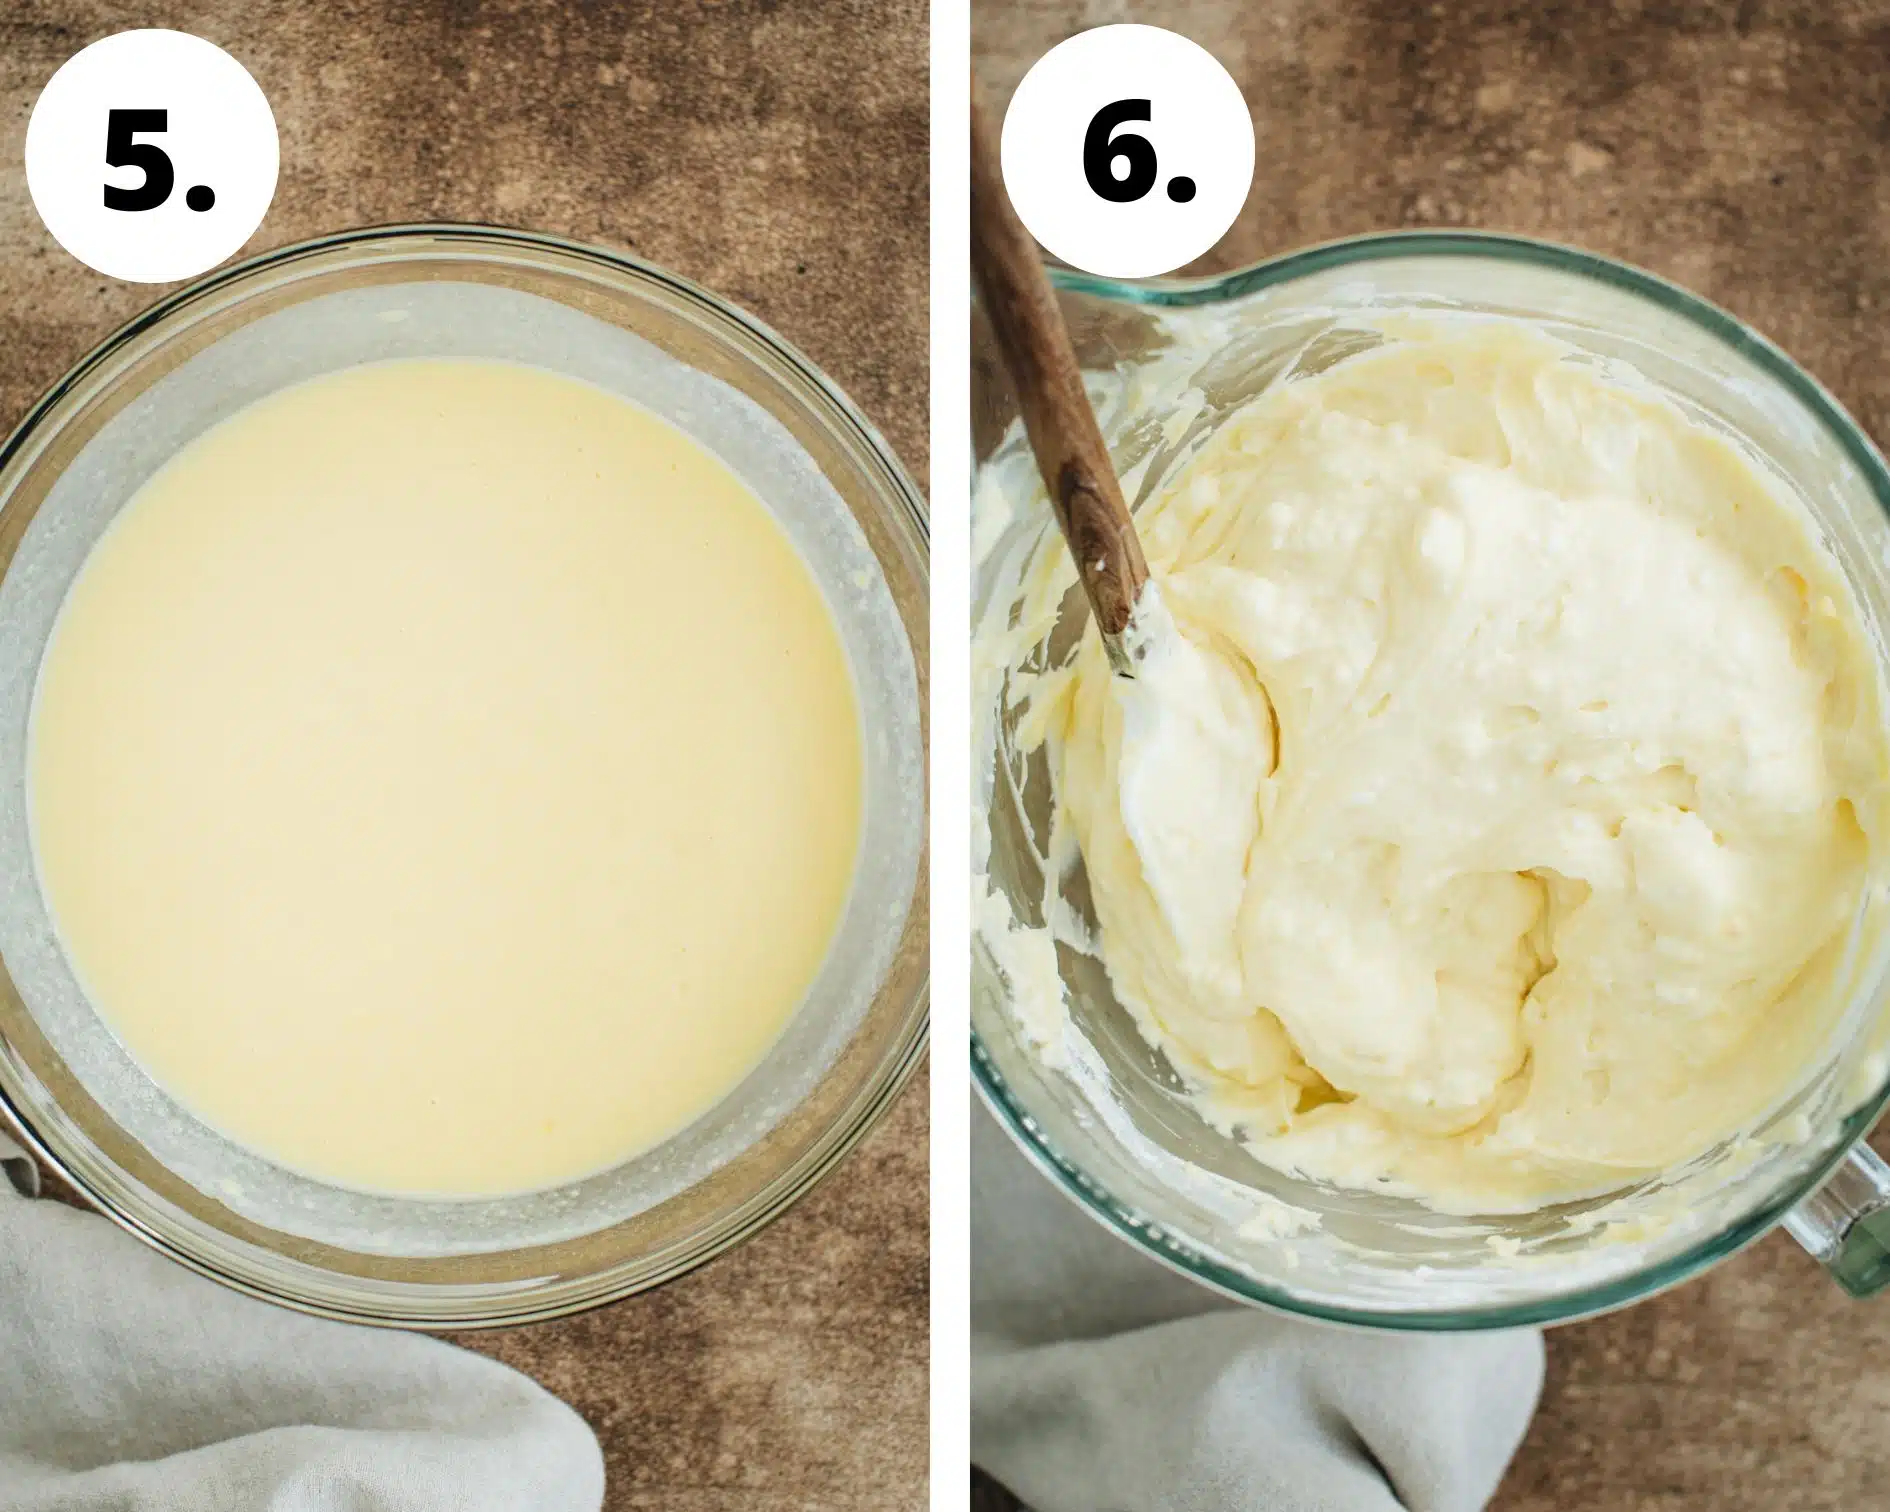 Dirt dessert recipe process steps 5 and 6.